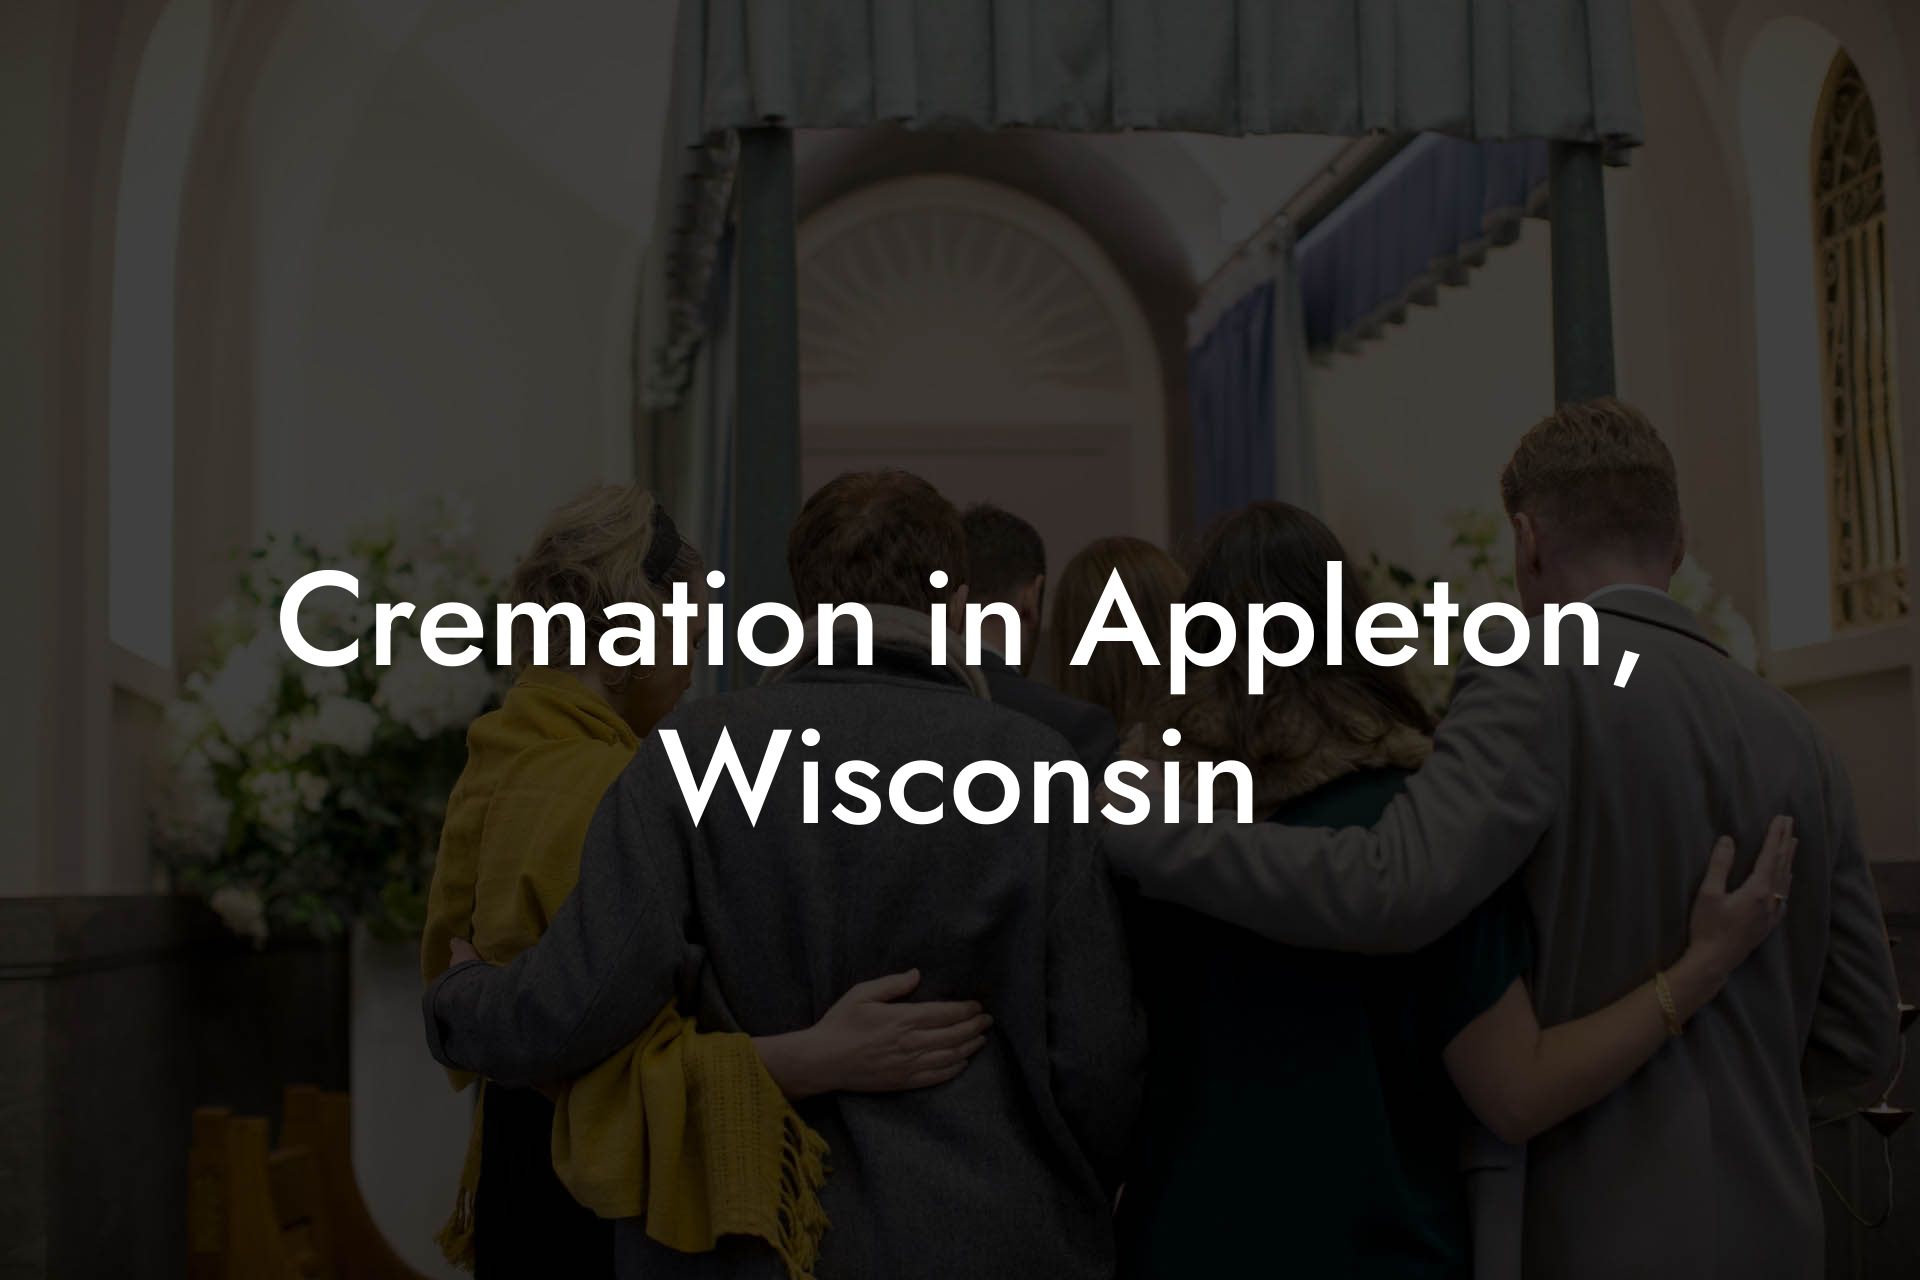 Cremation in Appleton, Wisconsin